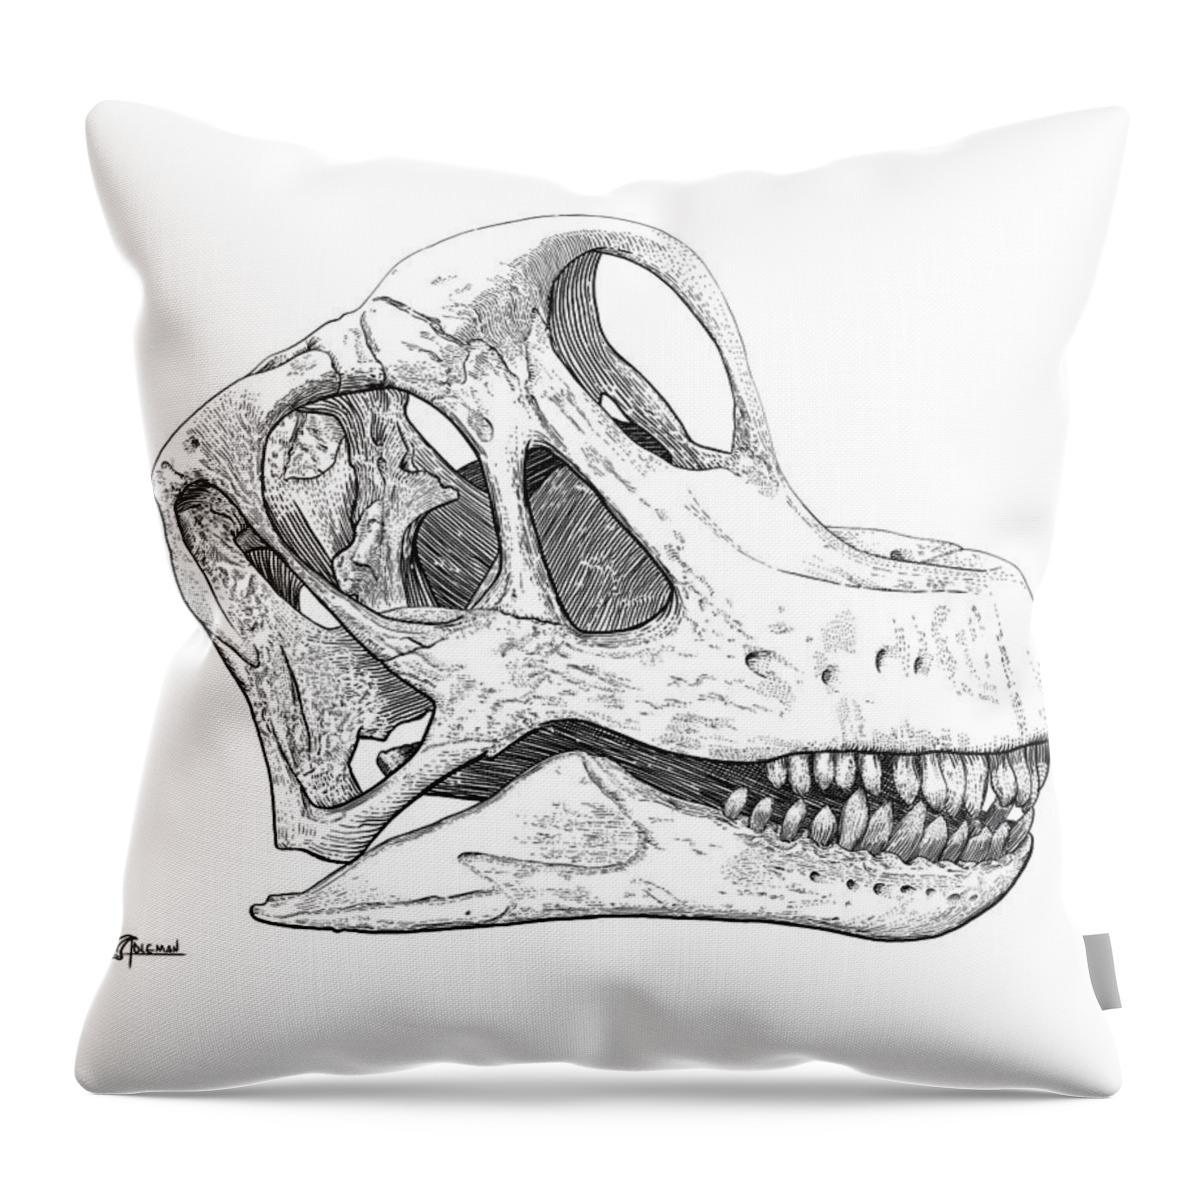 Brachiosaurus Throw Pillow featuring the digital art Brachiosaurus Black and White by Rick Adleman